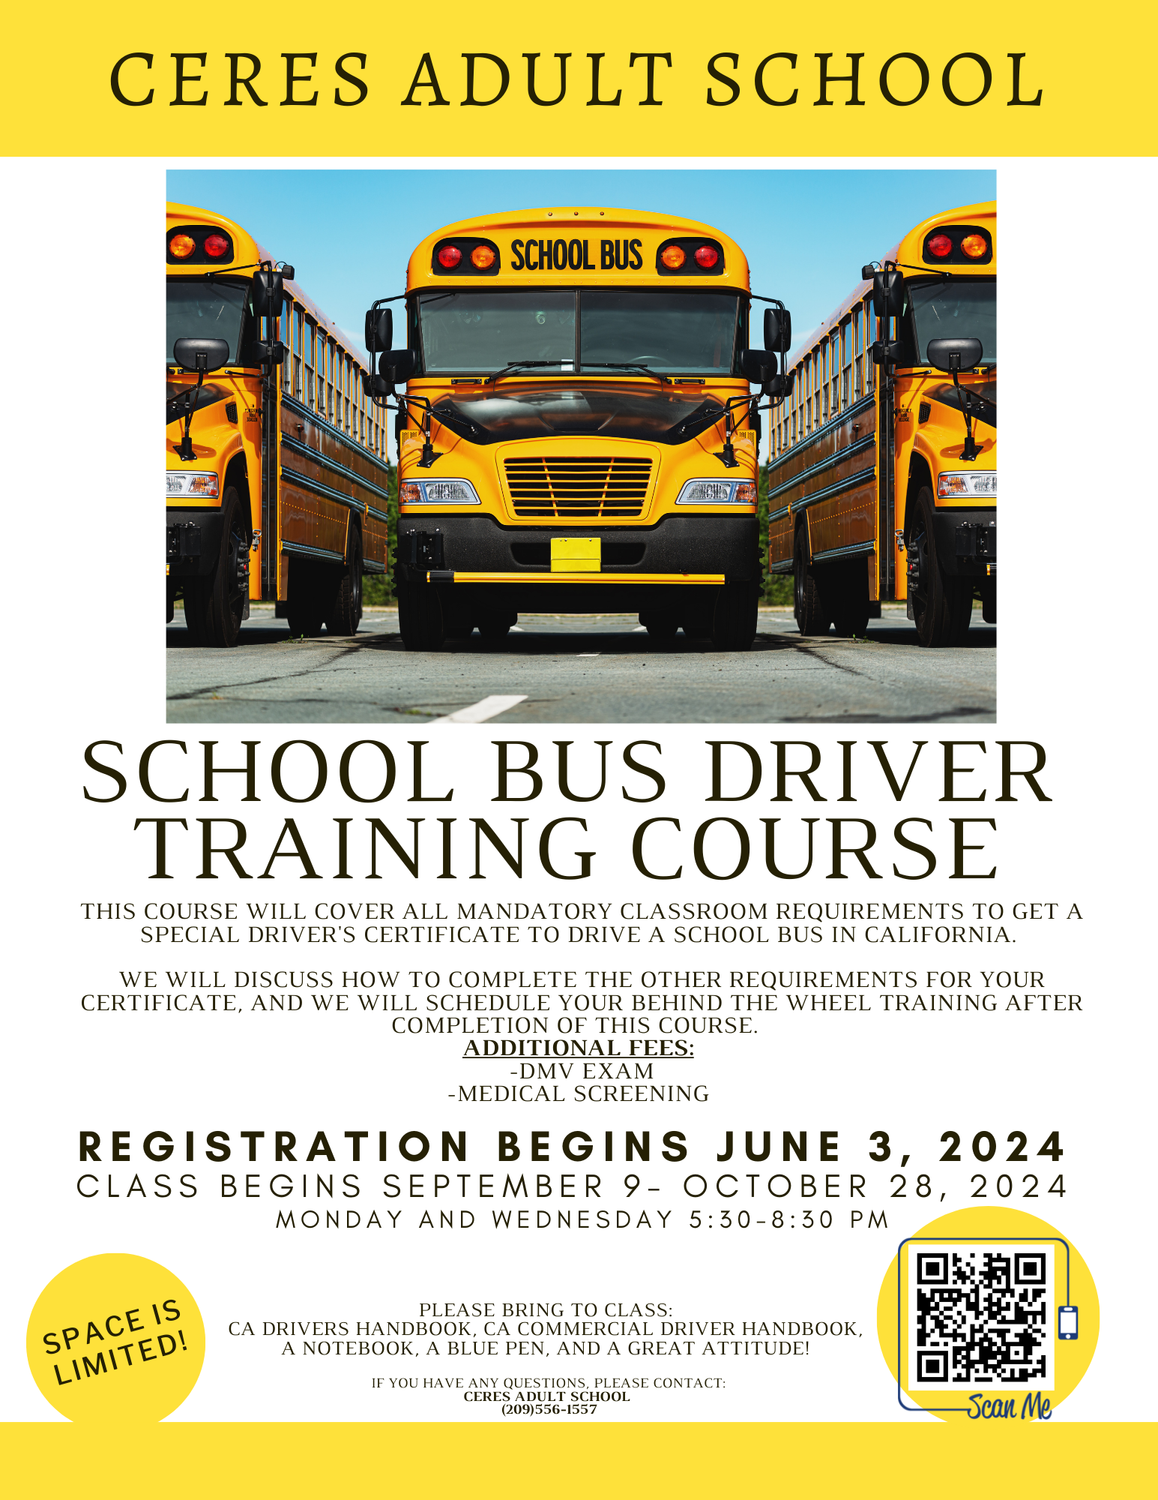 School bus driver training course